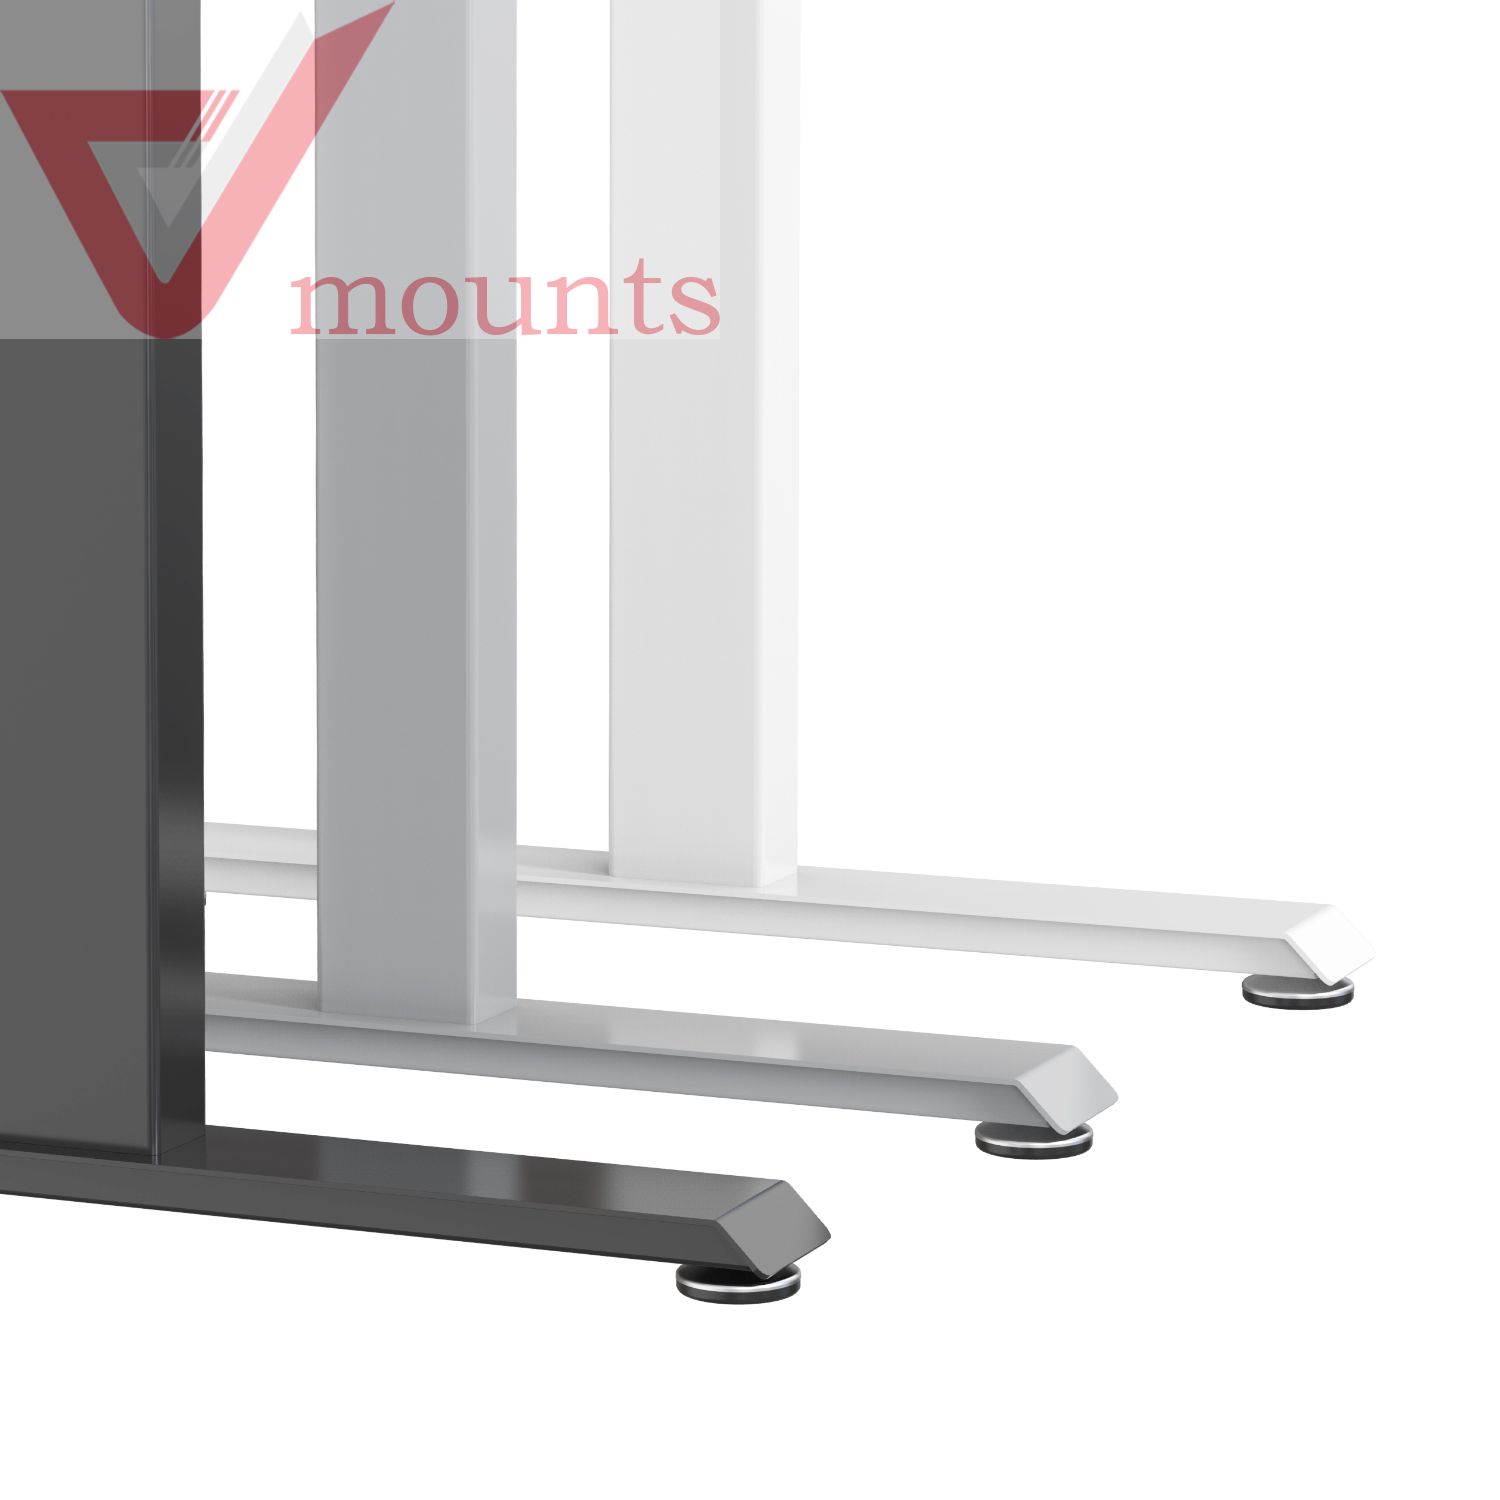 V-mounts ErgoFusion Hand-crank Manual Height Adjustable Desk VM-GHHD121D-1P